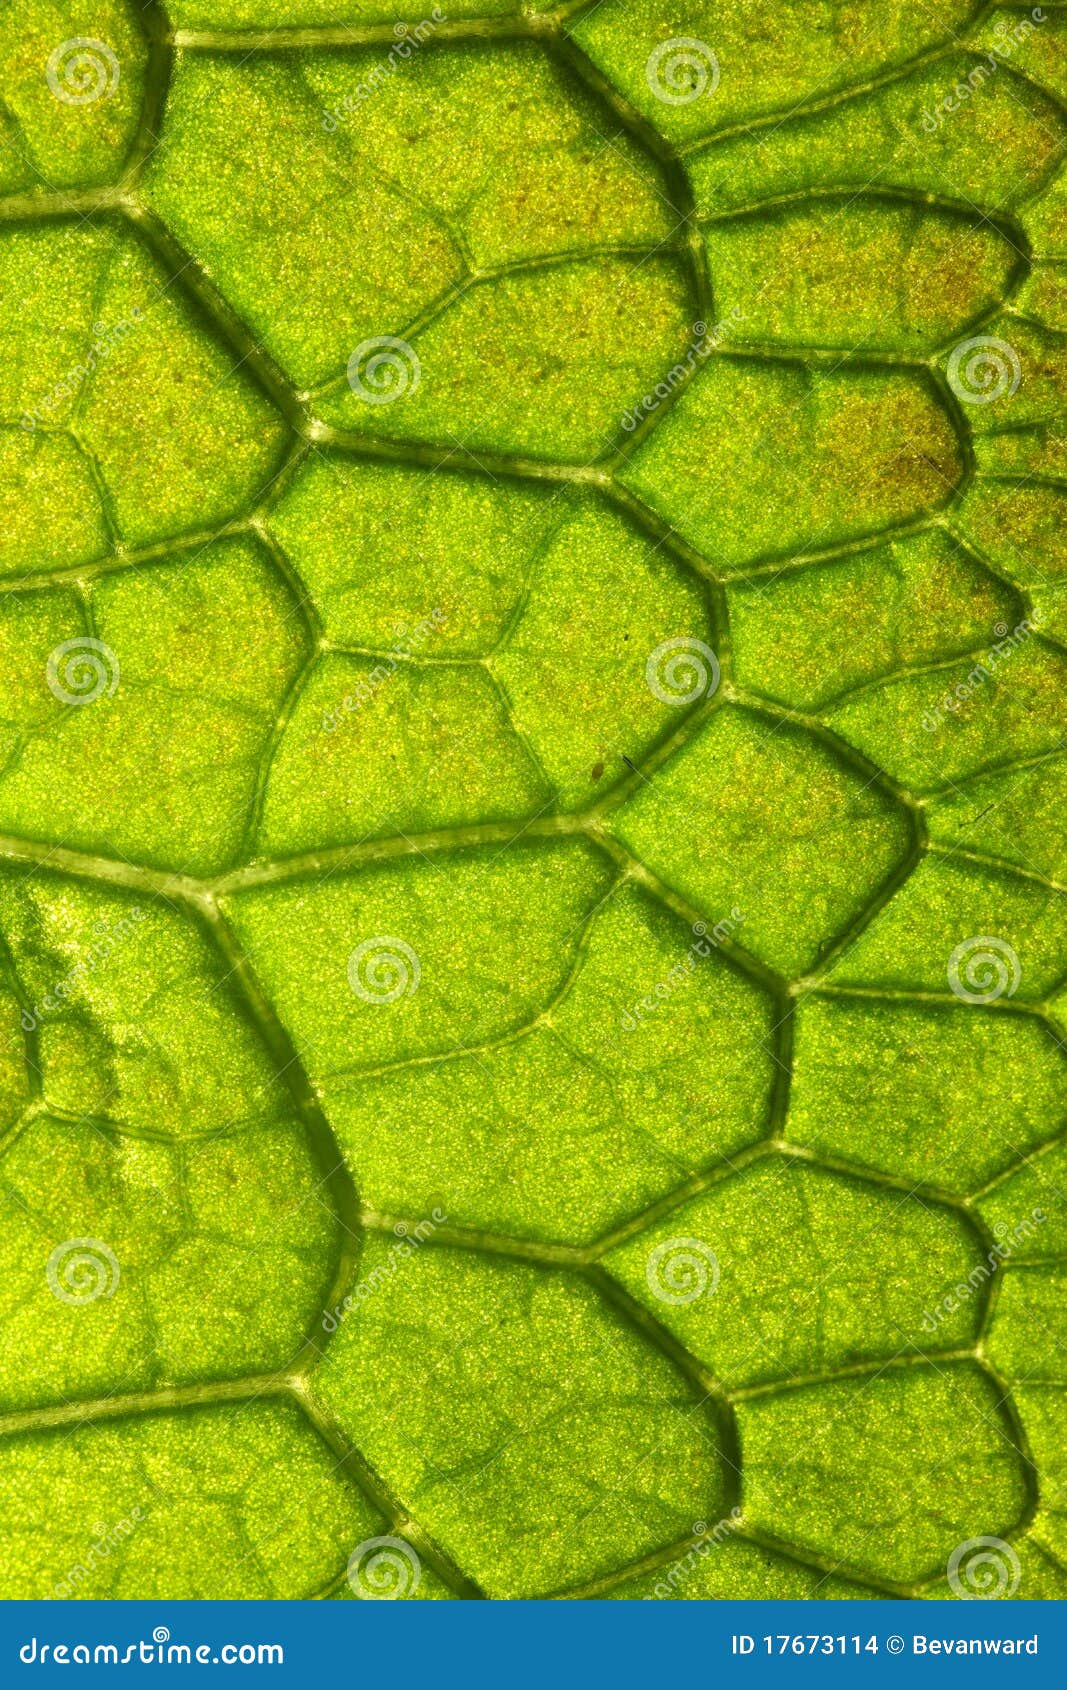 closeup detail of leaf